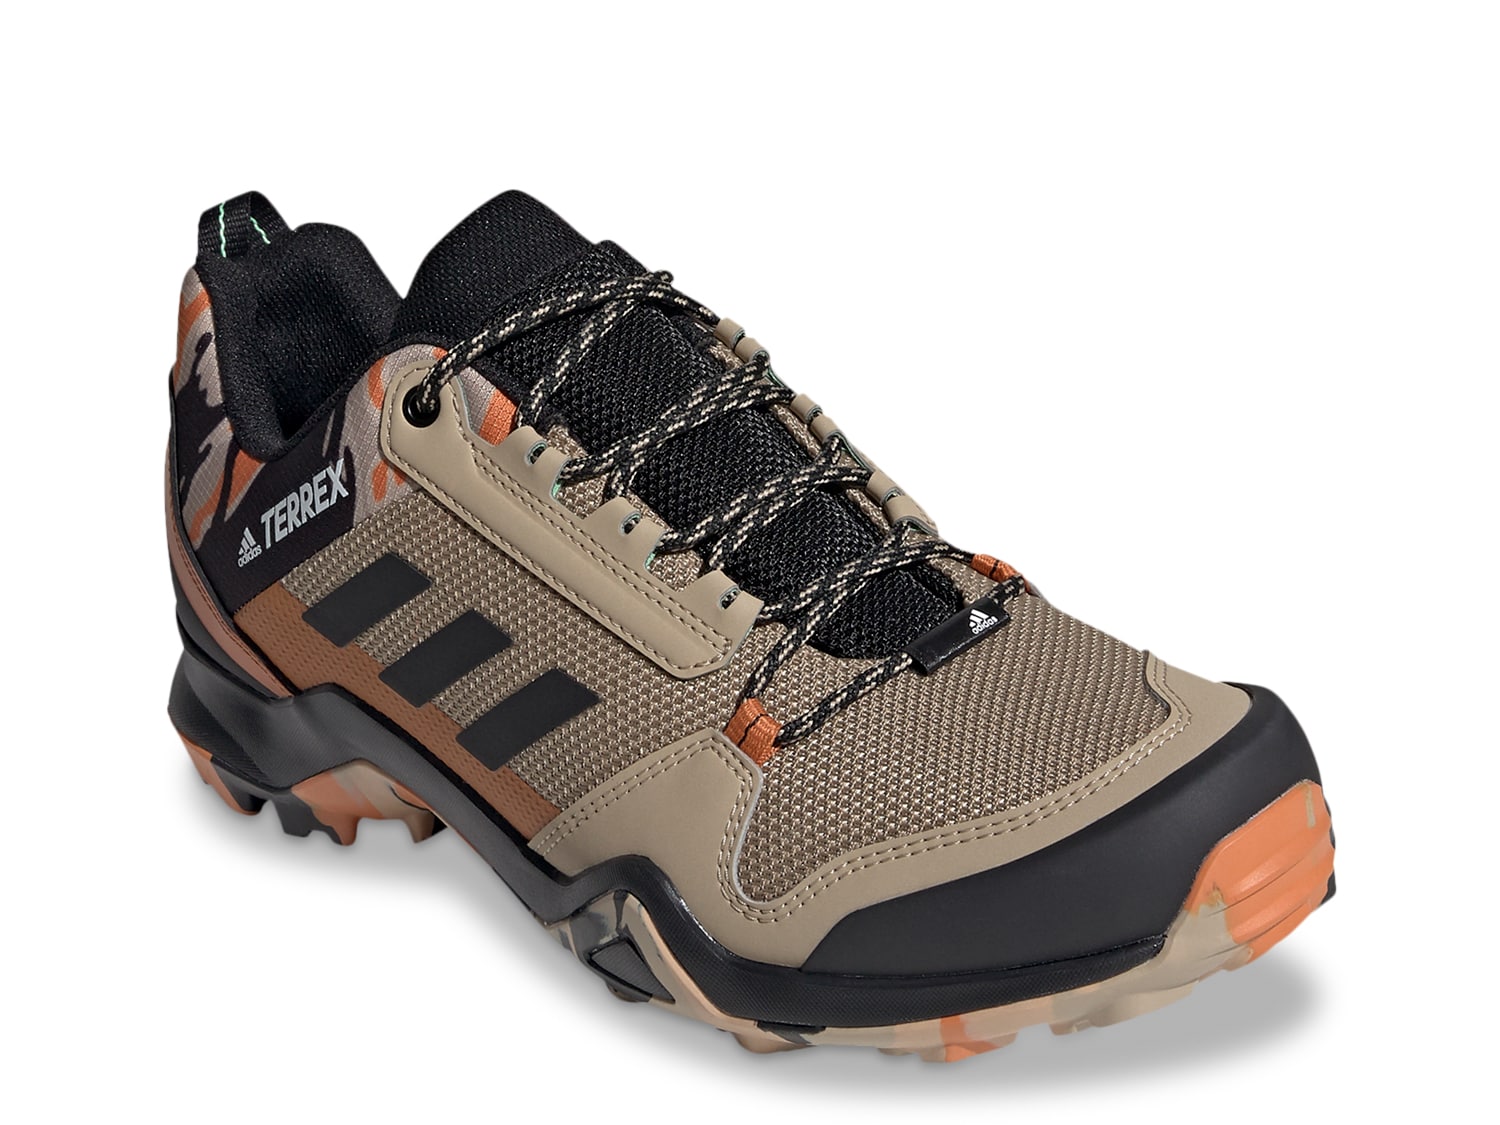 adidas terrex ax3 hiking shoes men's